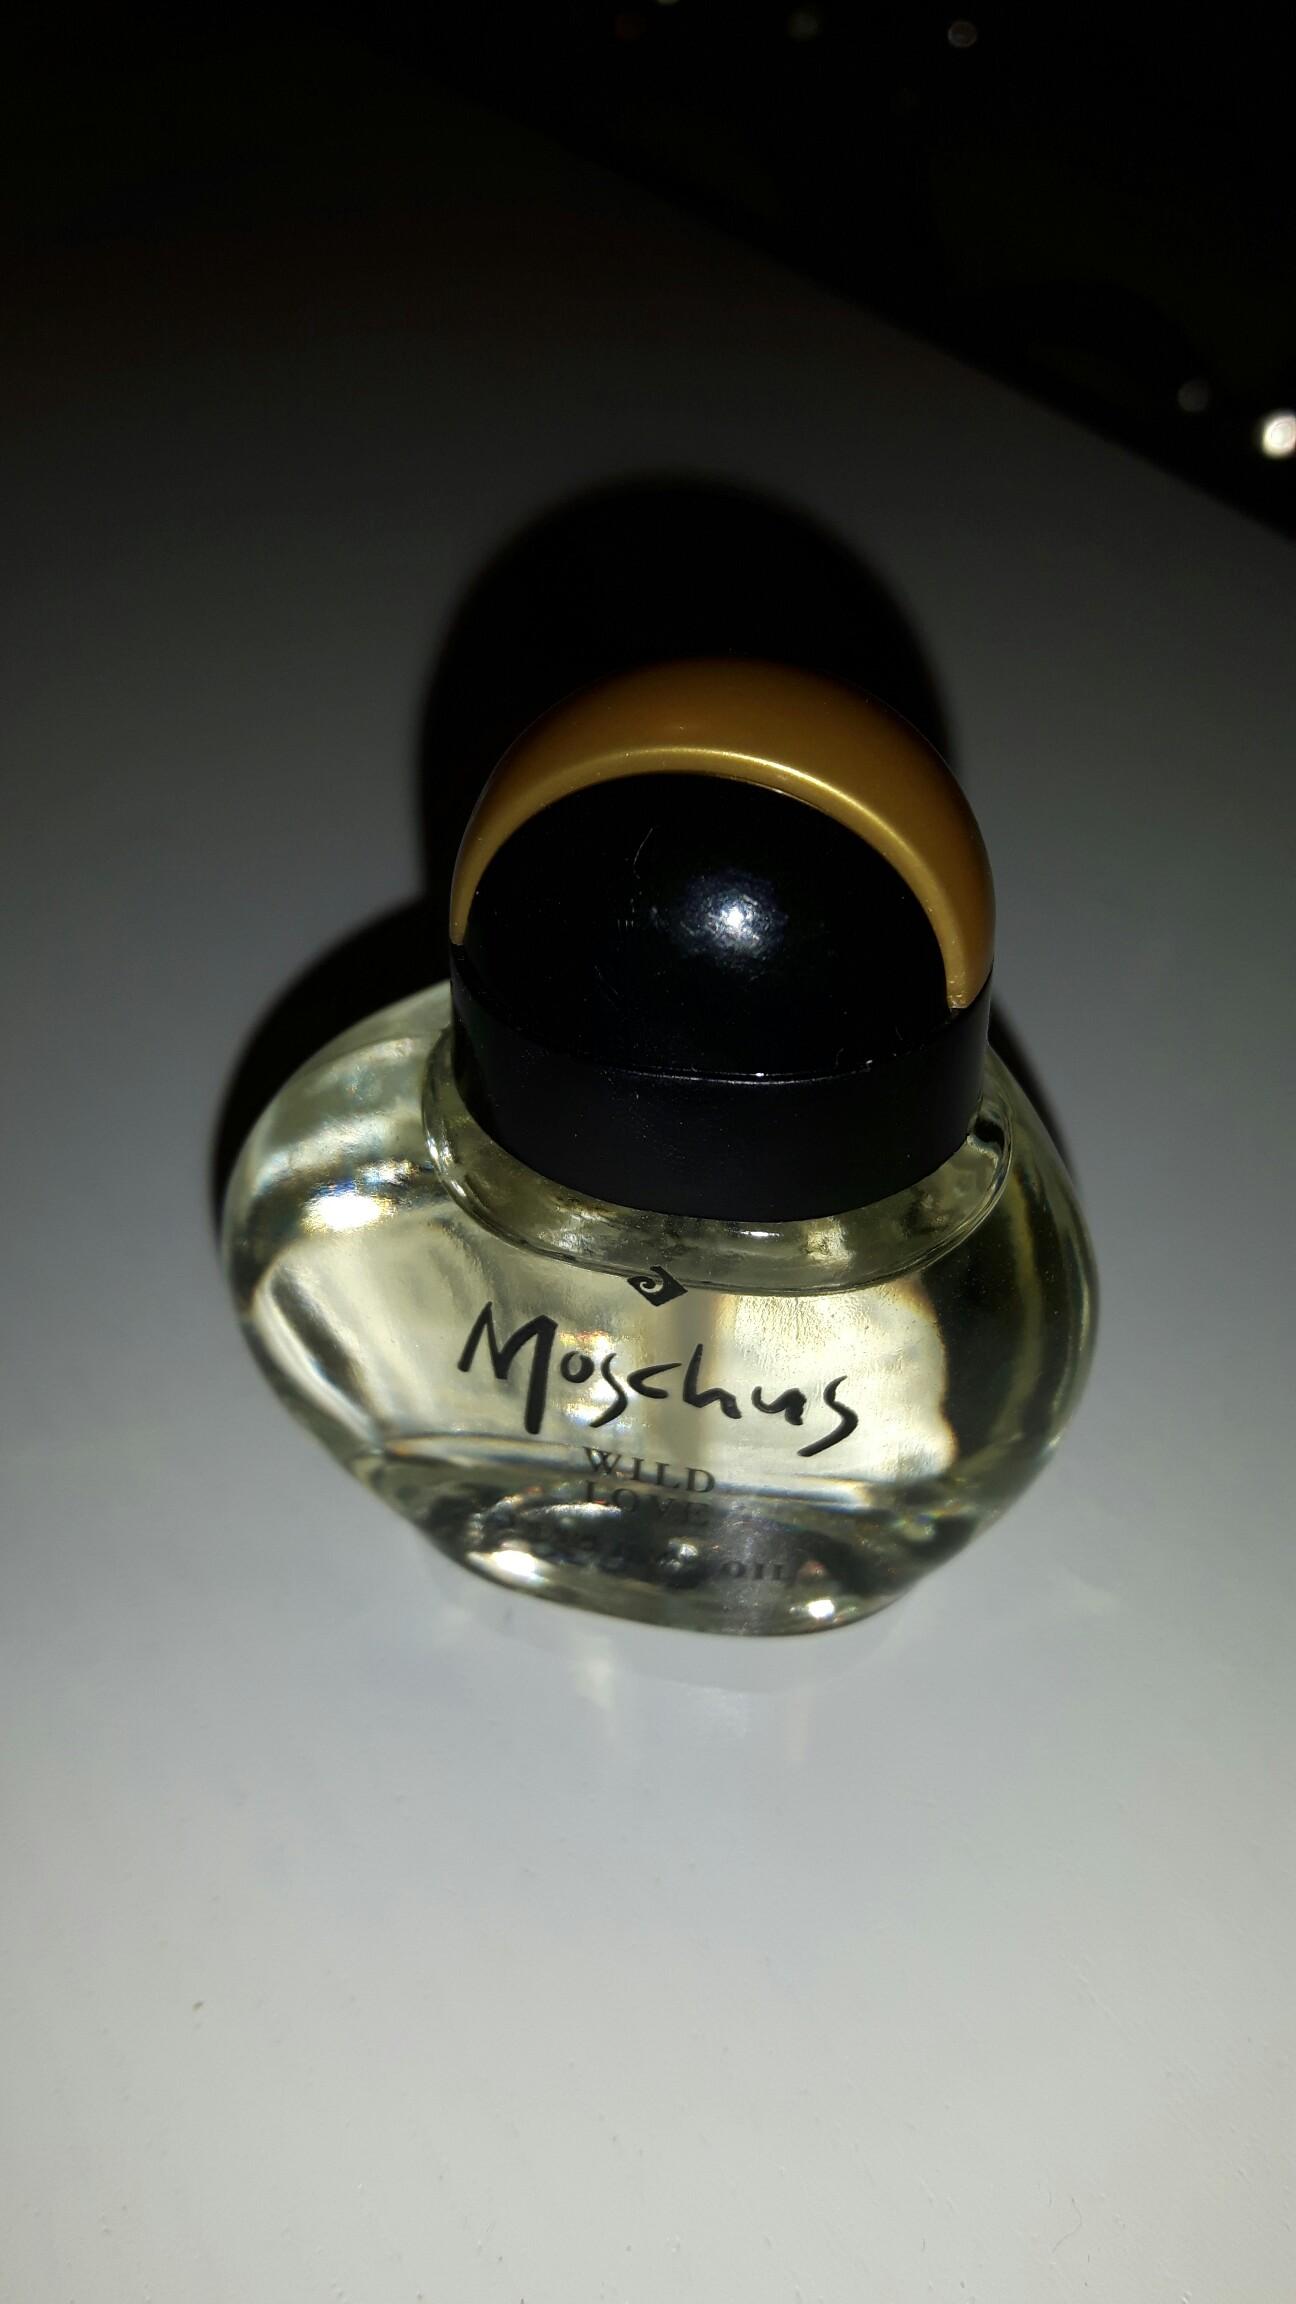 Oil 5ml perfume moschus wild love 9 Fragrances :